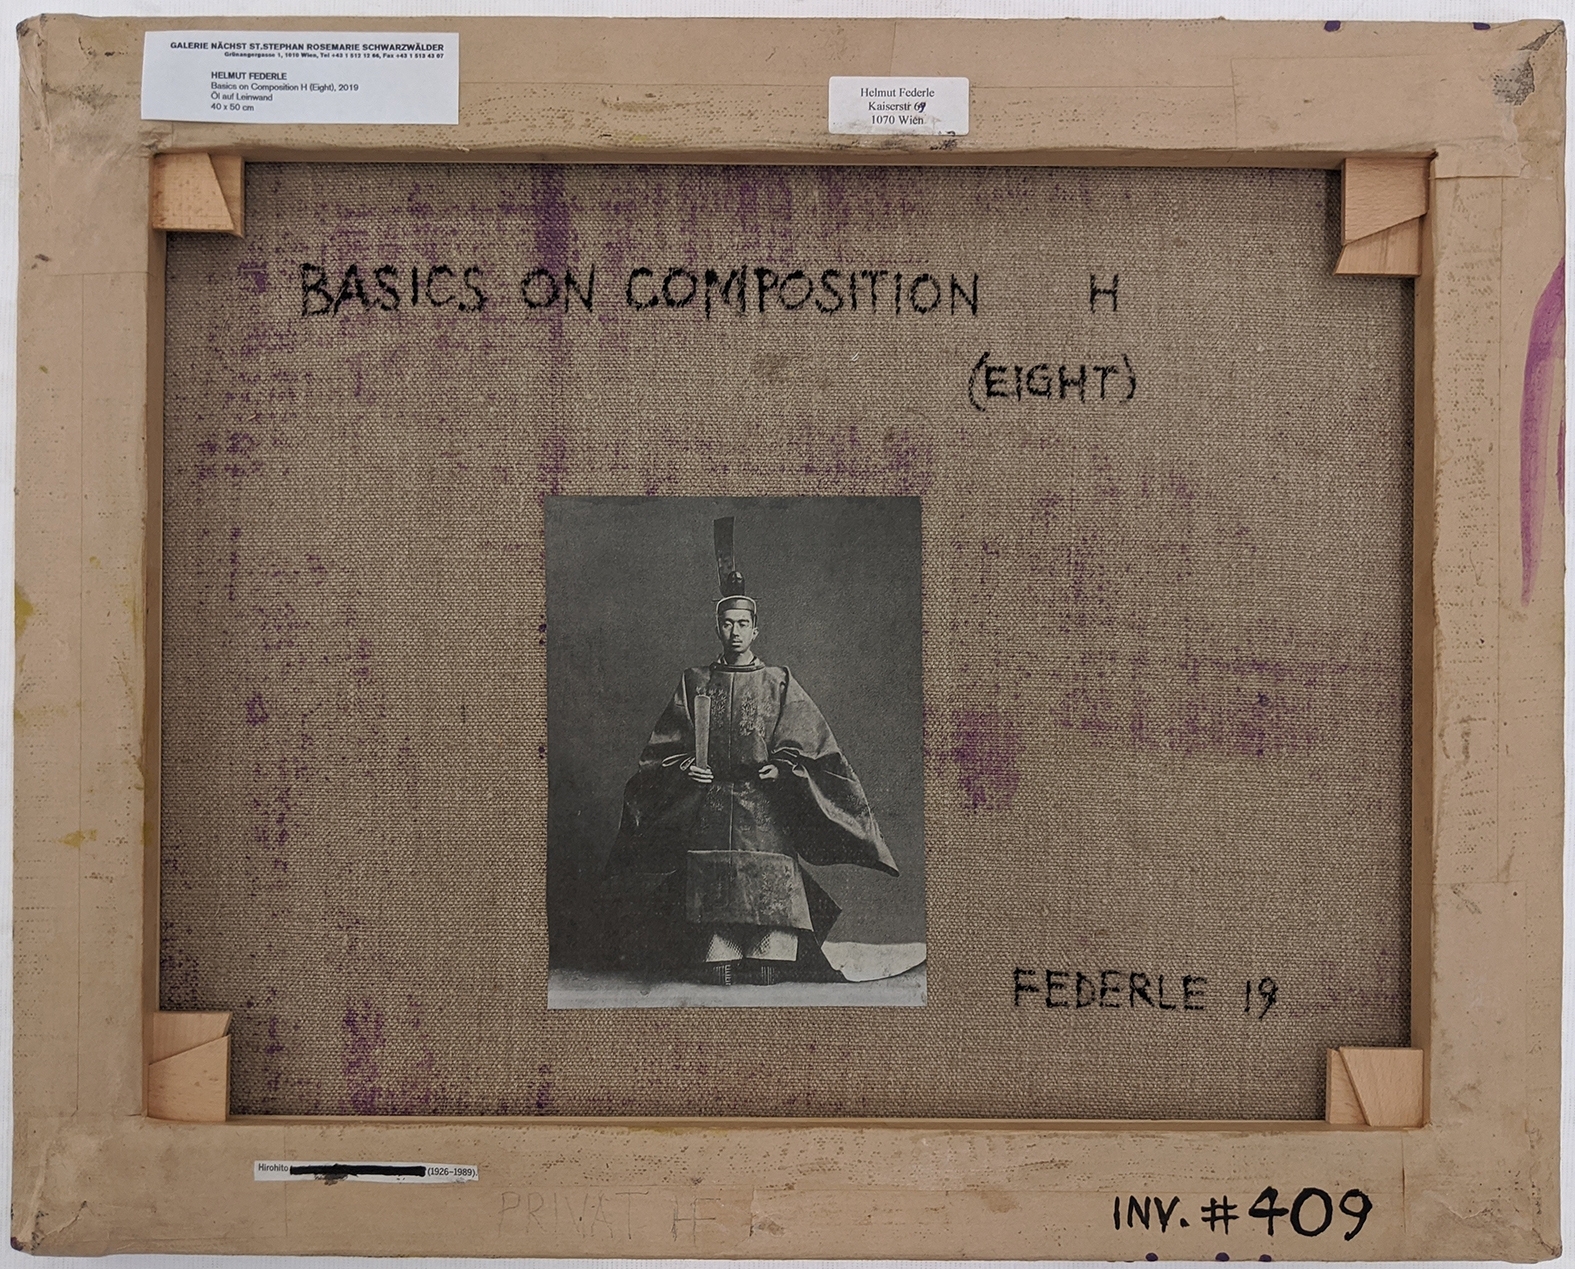 Verso of Helmut Federle,&nbsp;Basics on Composition H (Eight),&nbsp;2019
&nbsp;